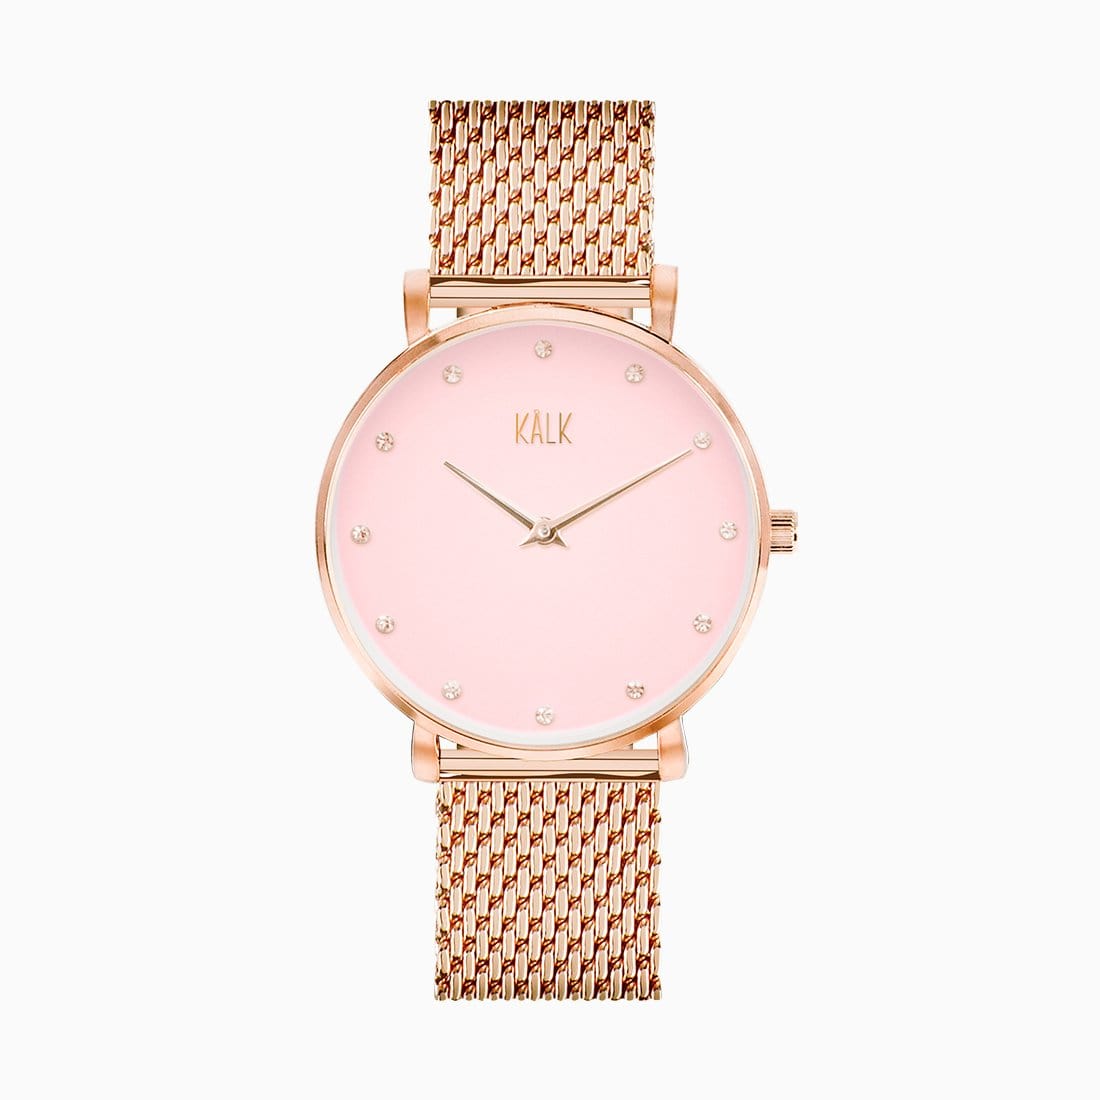 Dreamy Rose Gold / Light Pink Watch